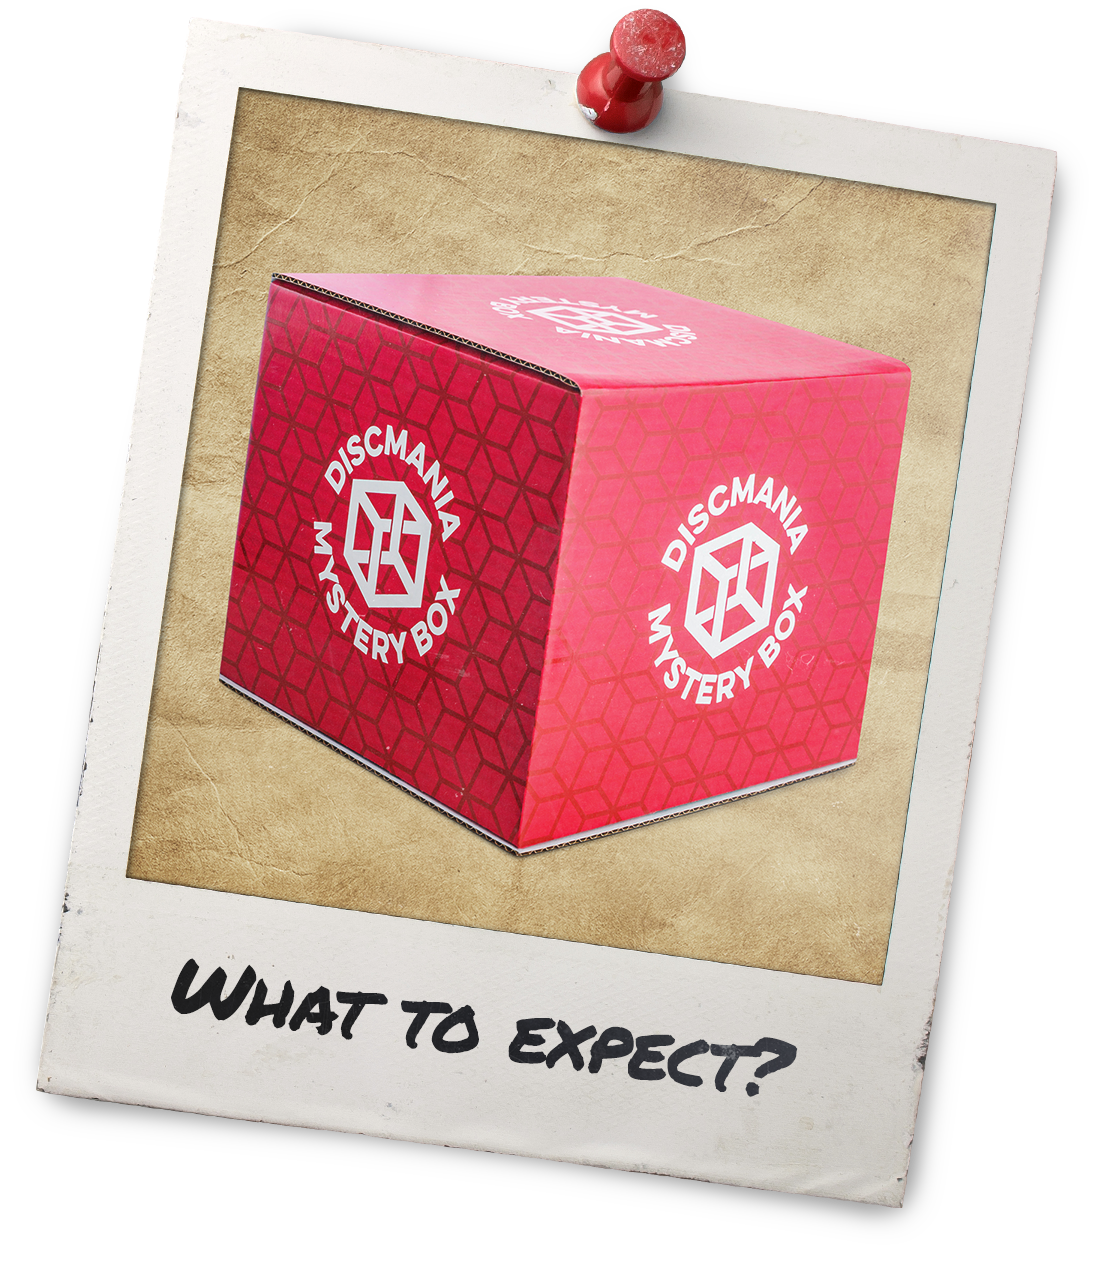 Discmania Mystery Box (Red Edition)